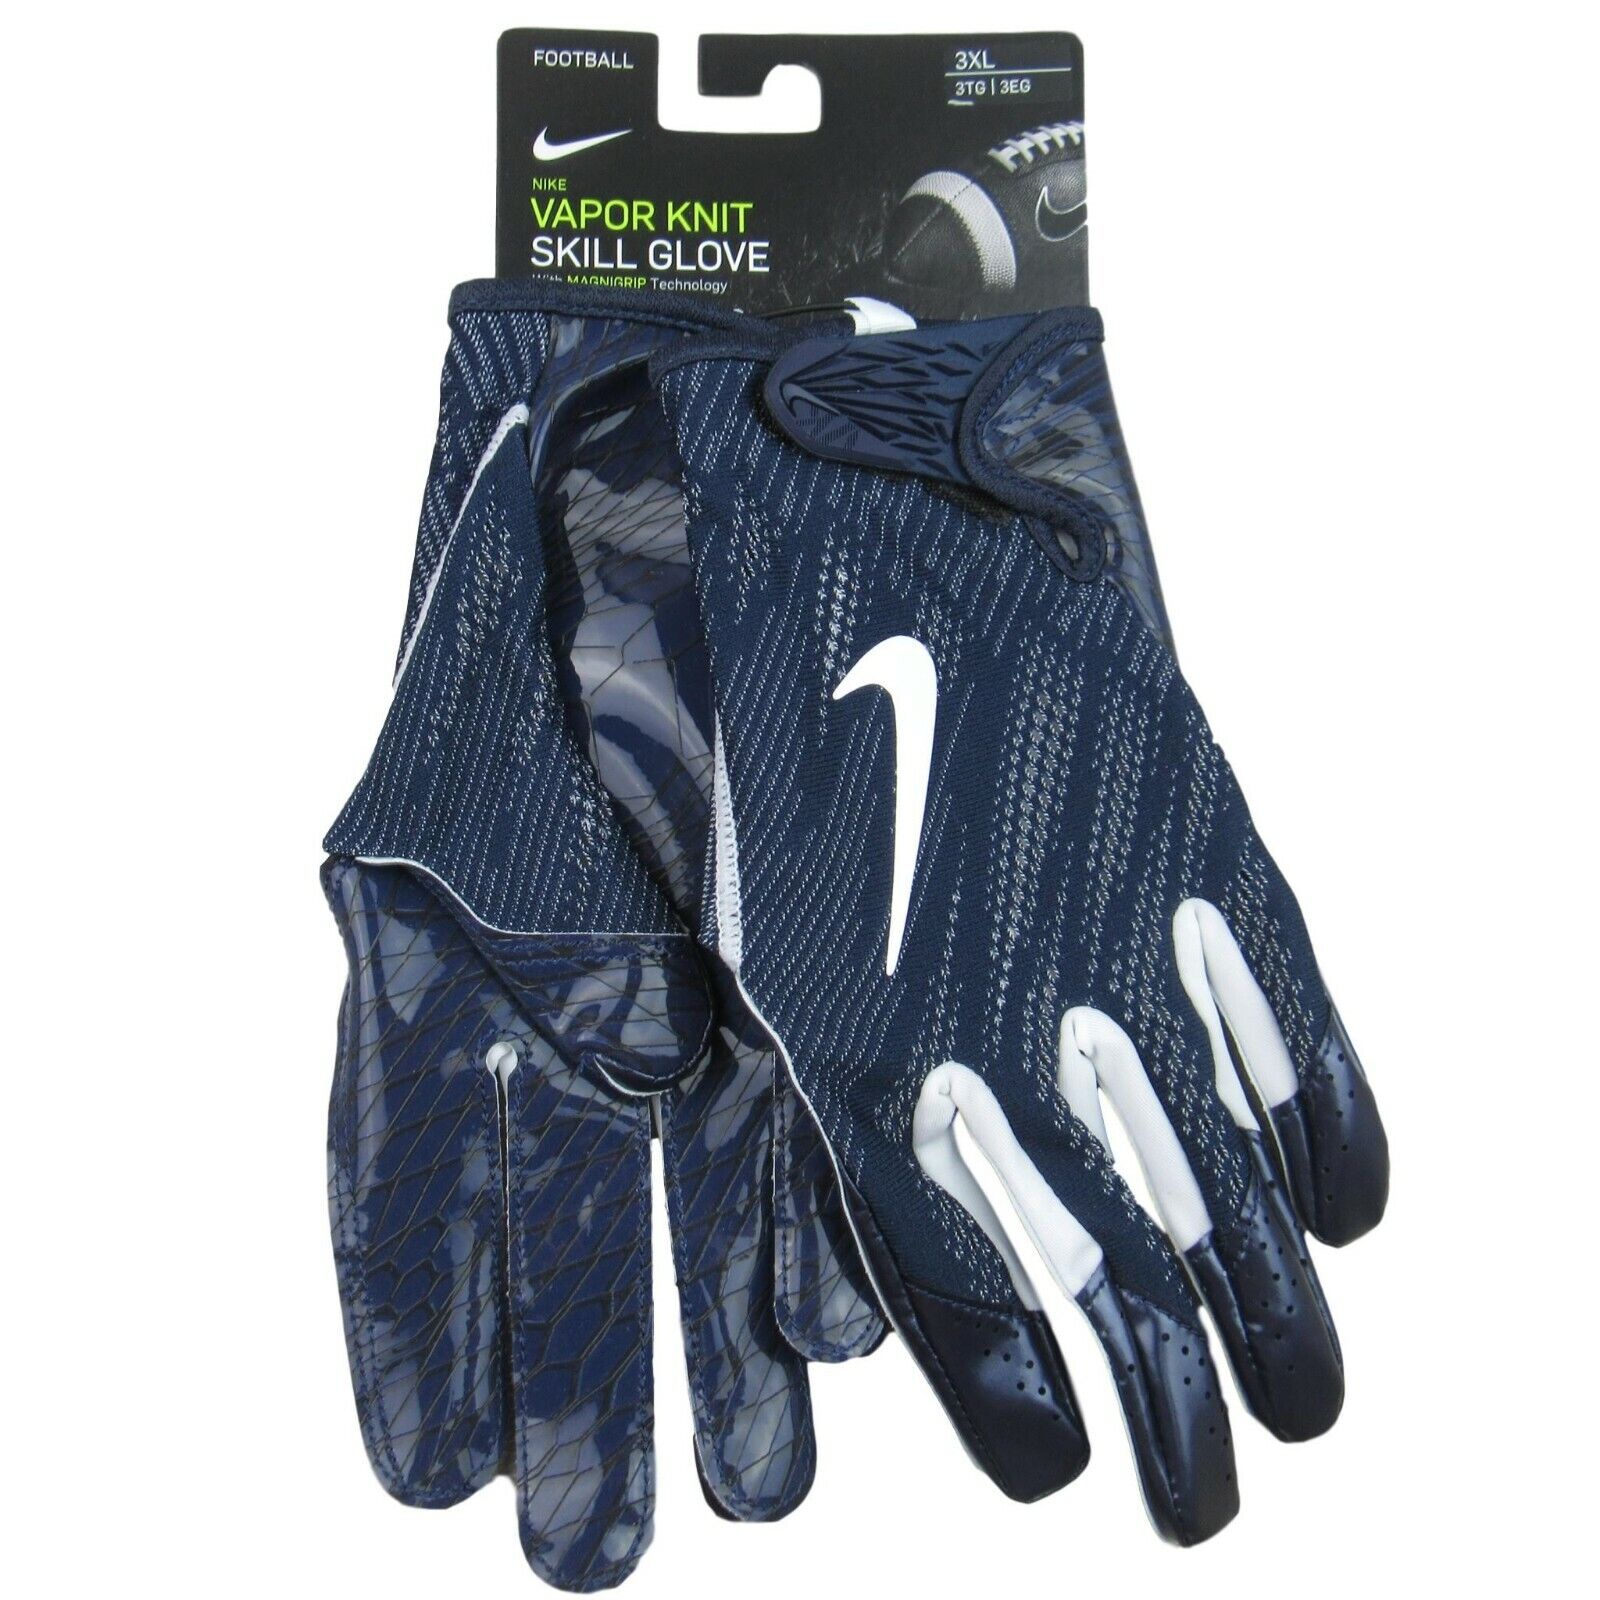 Nike Vapor Knit Football Skill Gloves Adult Size 3XL Blue Whit...